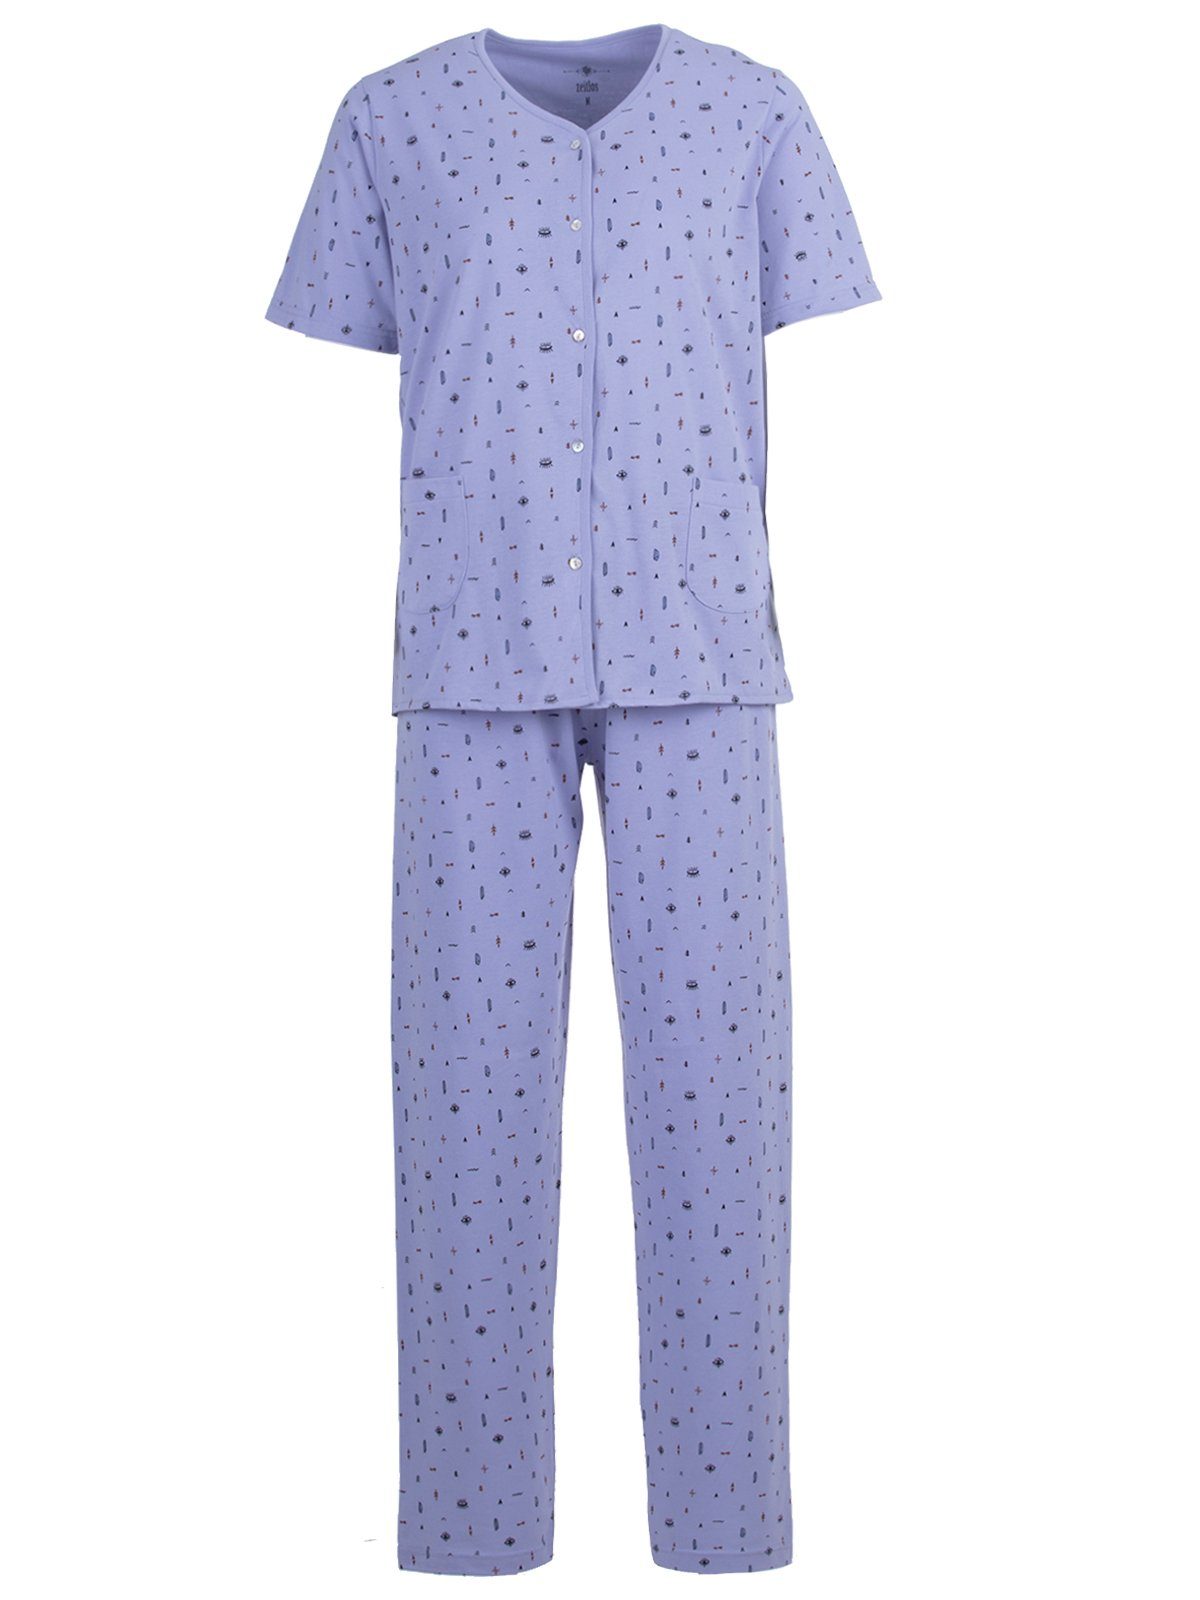 zeitlos Schlafanzug Pyjama Set Kurzarm - Auge flieder